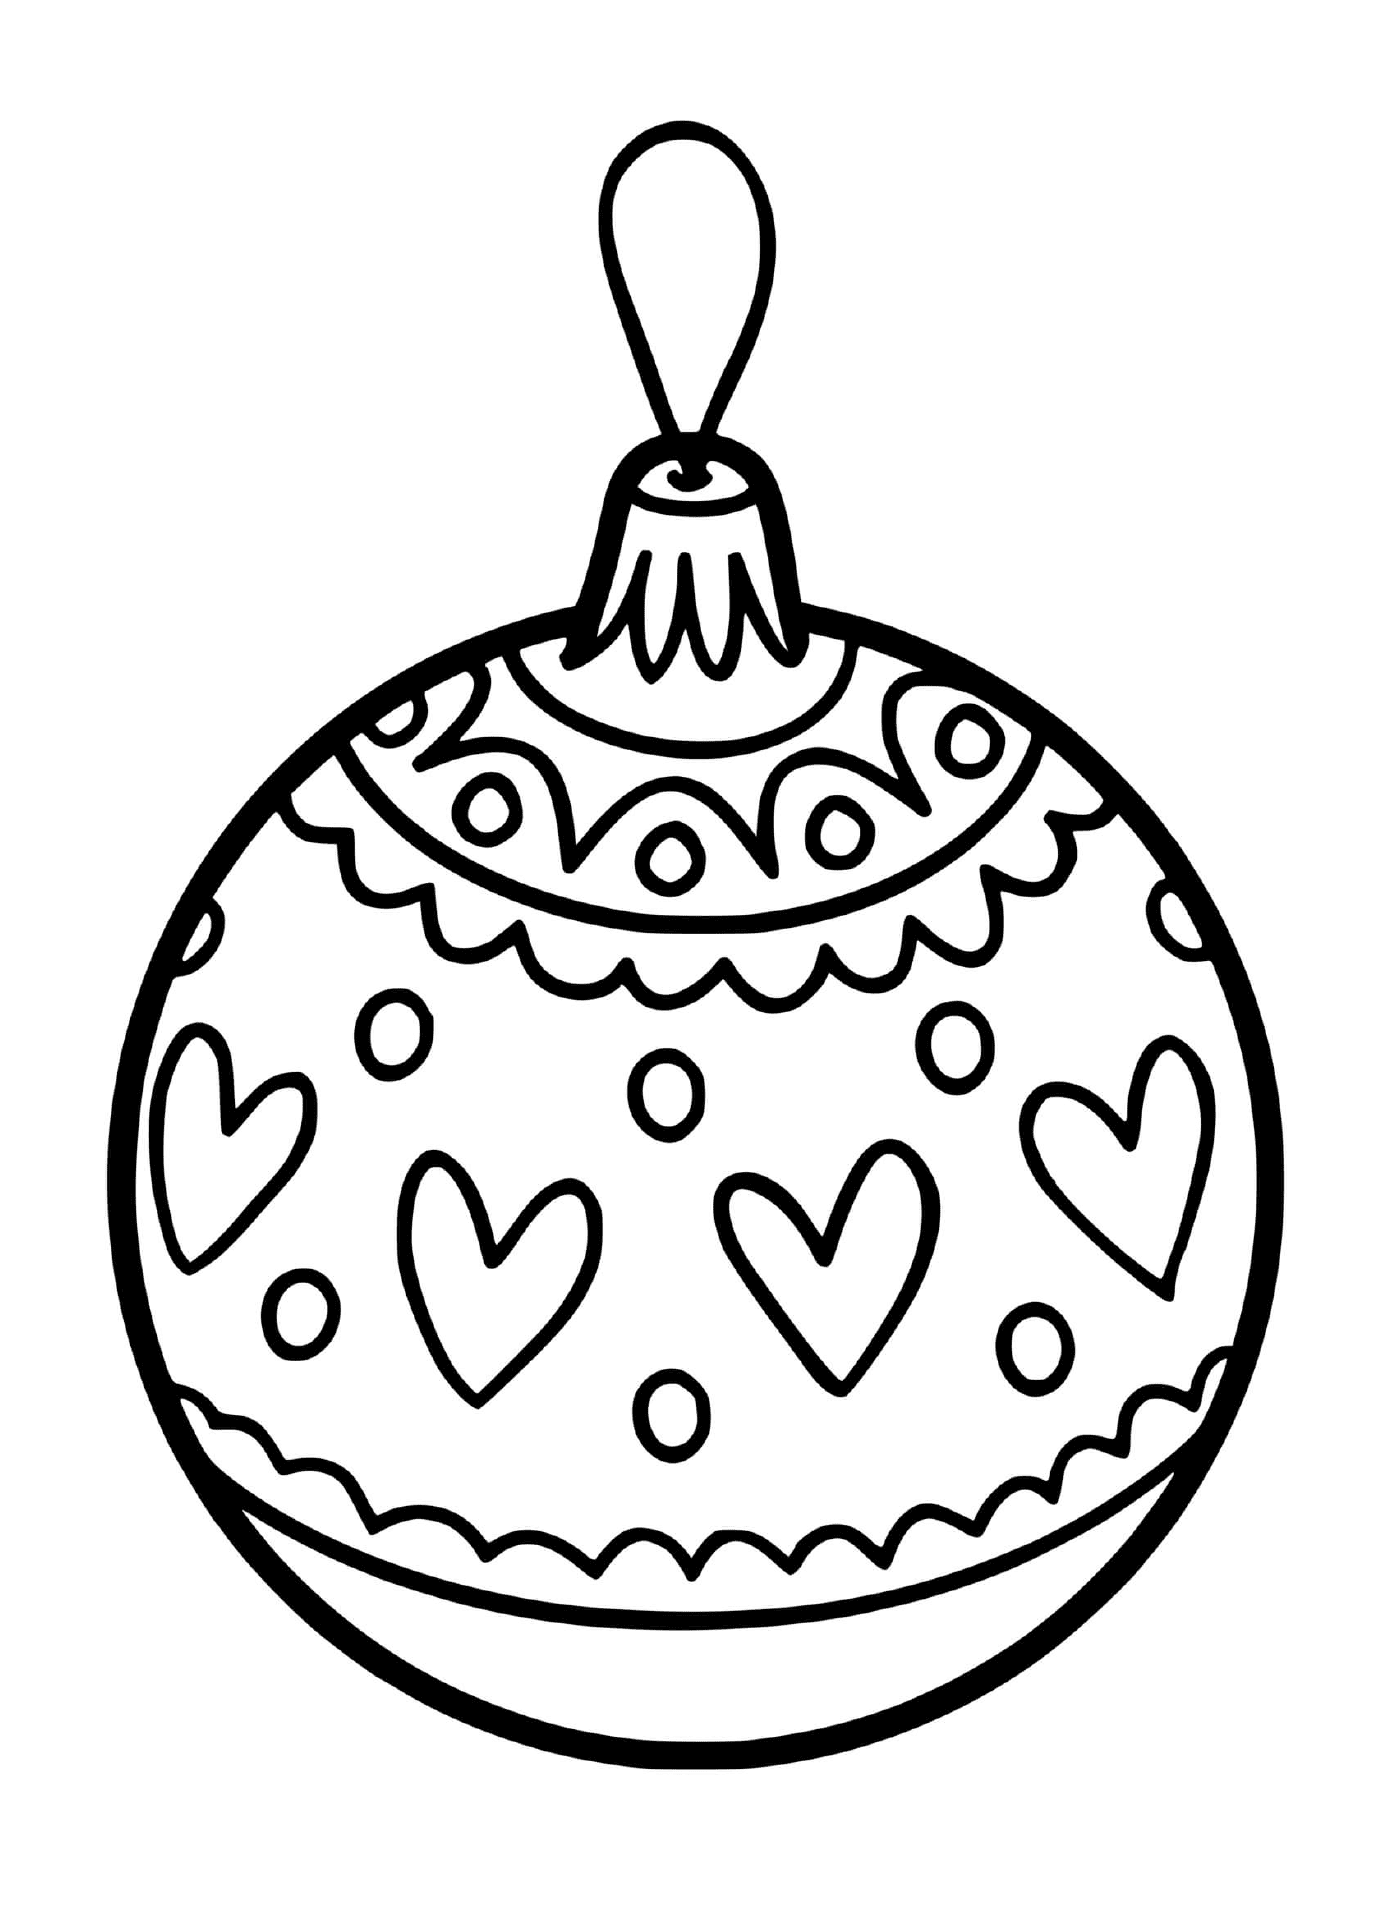  A Christmas ball for a heart shaped tree 